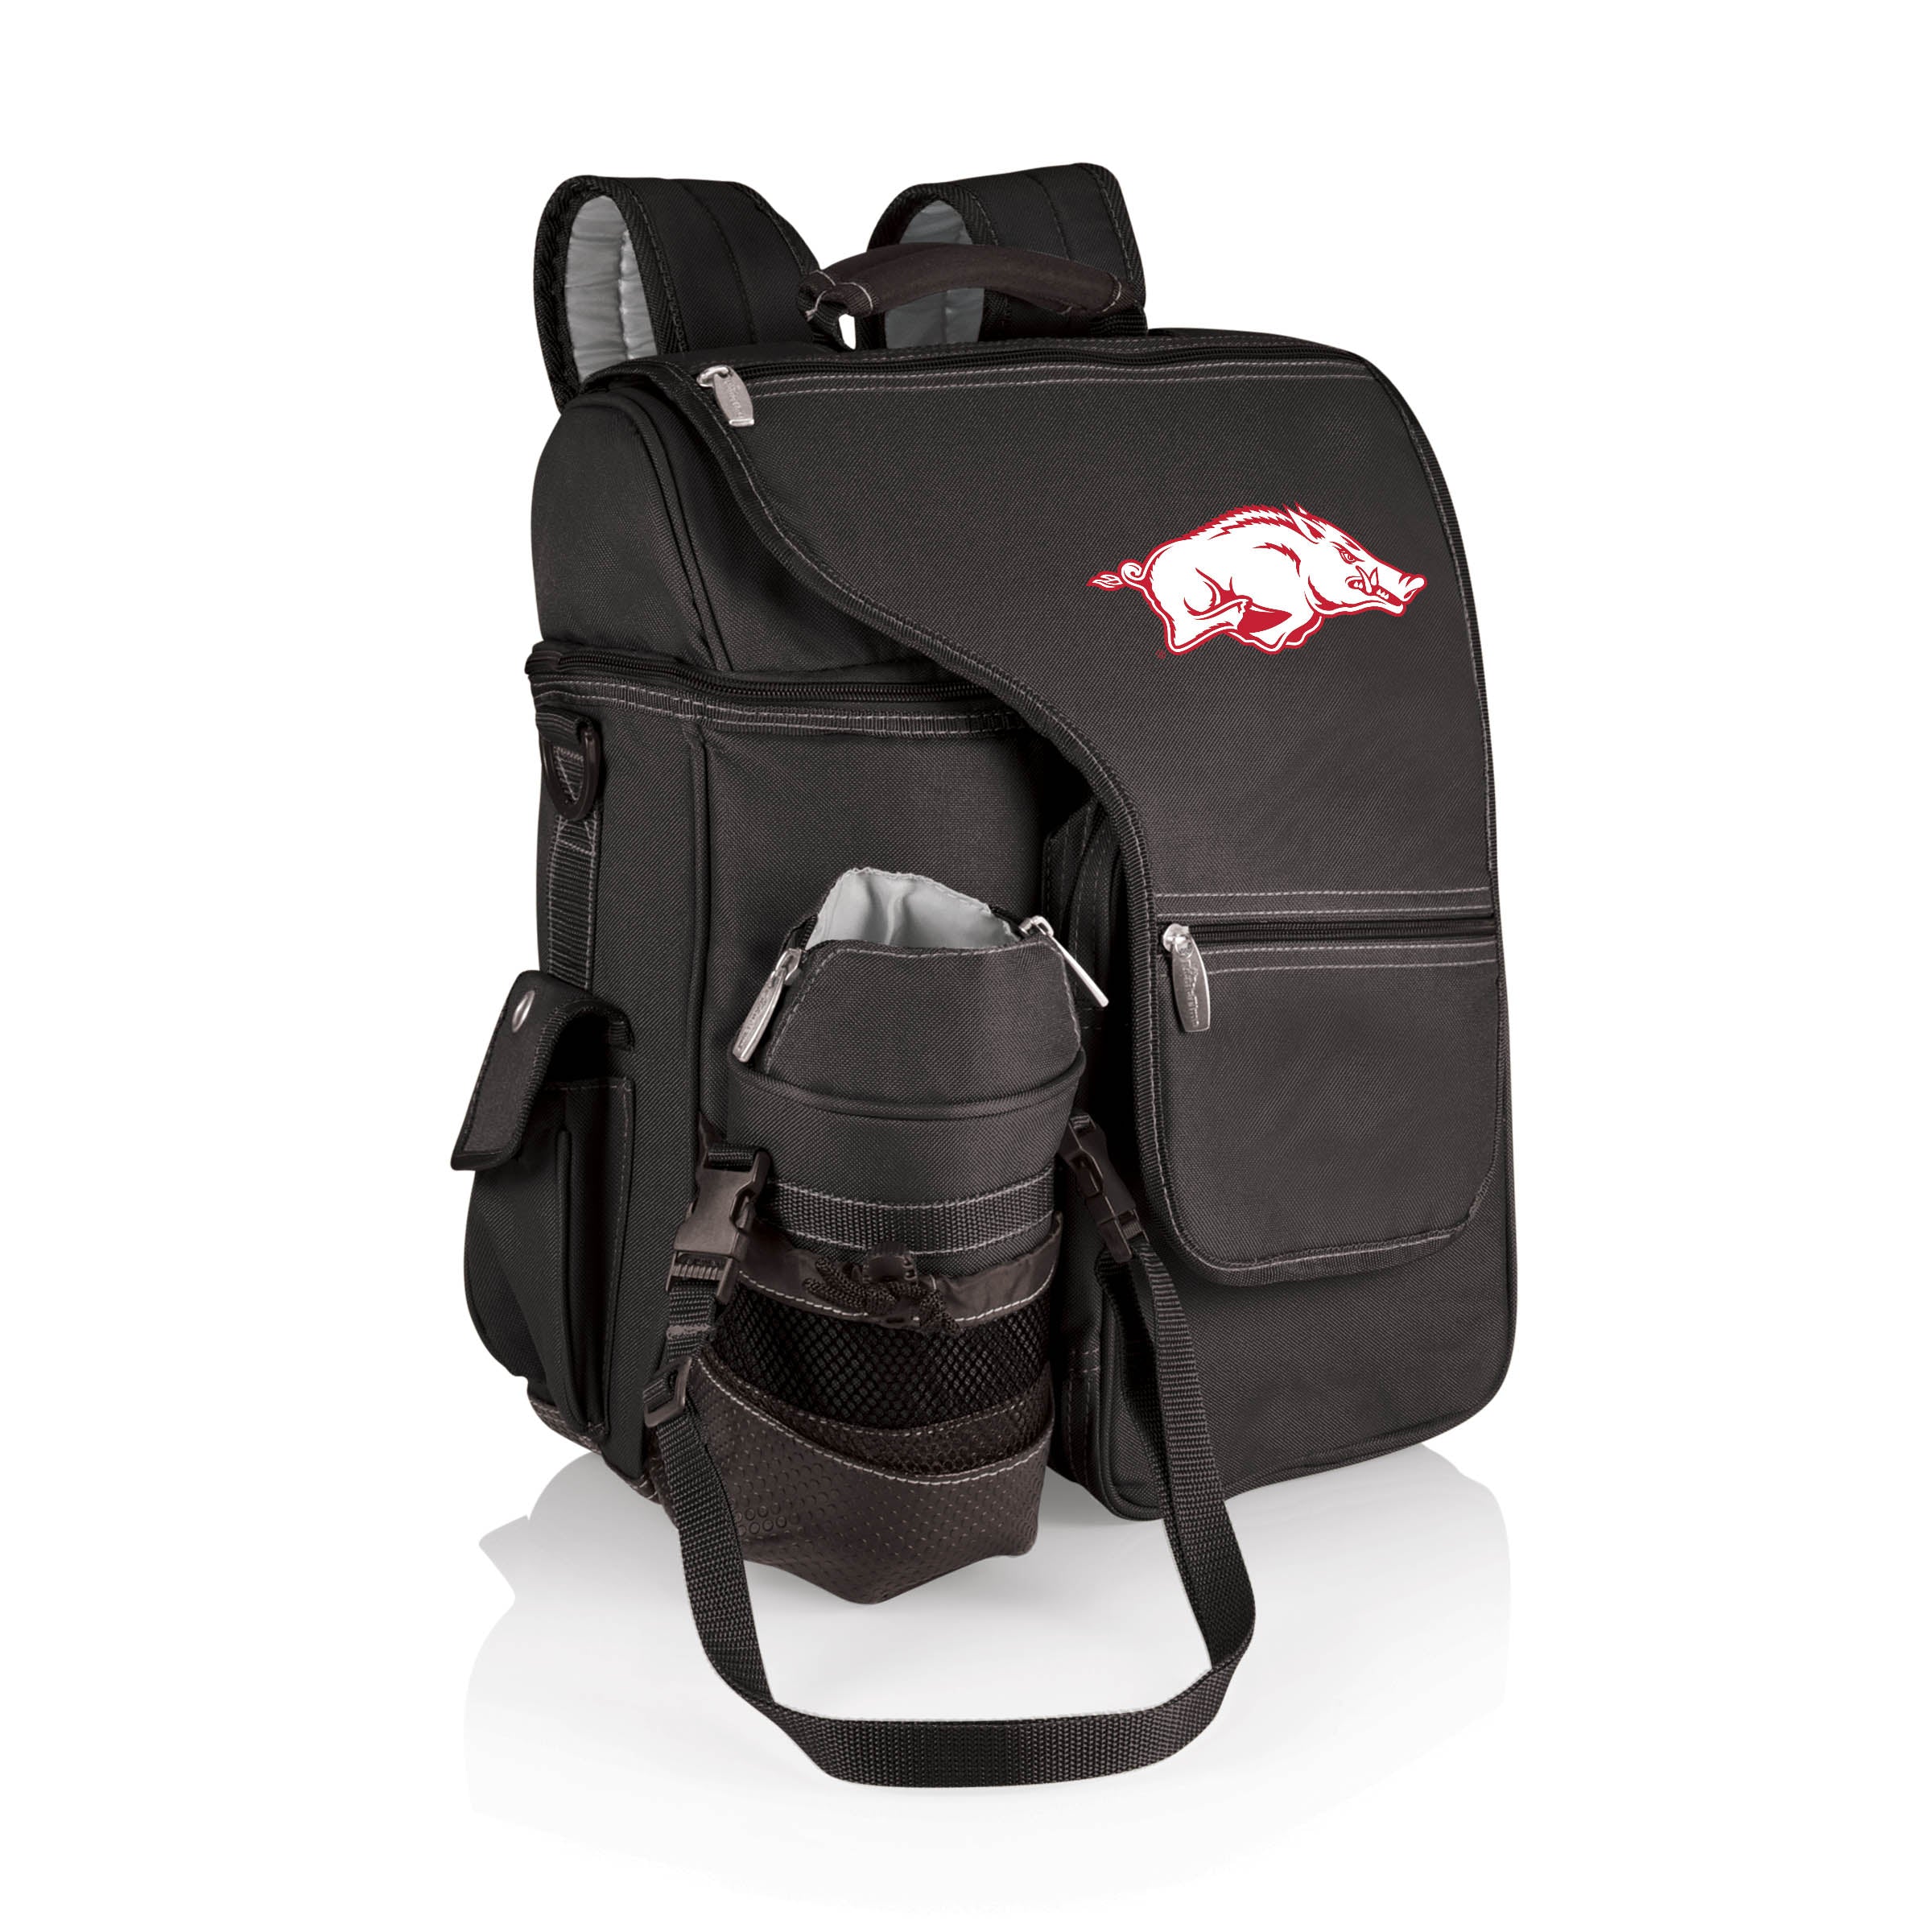 Arkansas Razorbacks - Turismo Travel Backpack Cooler